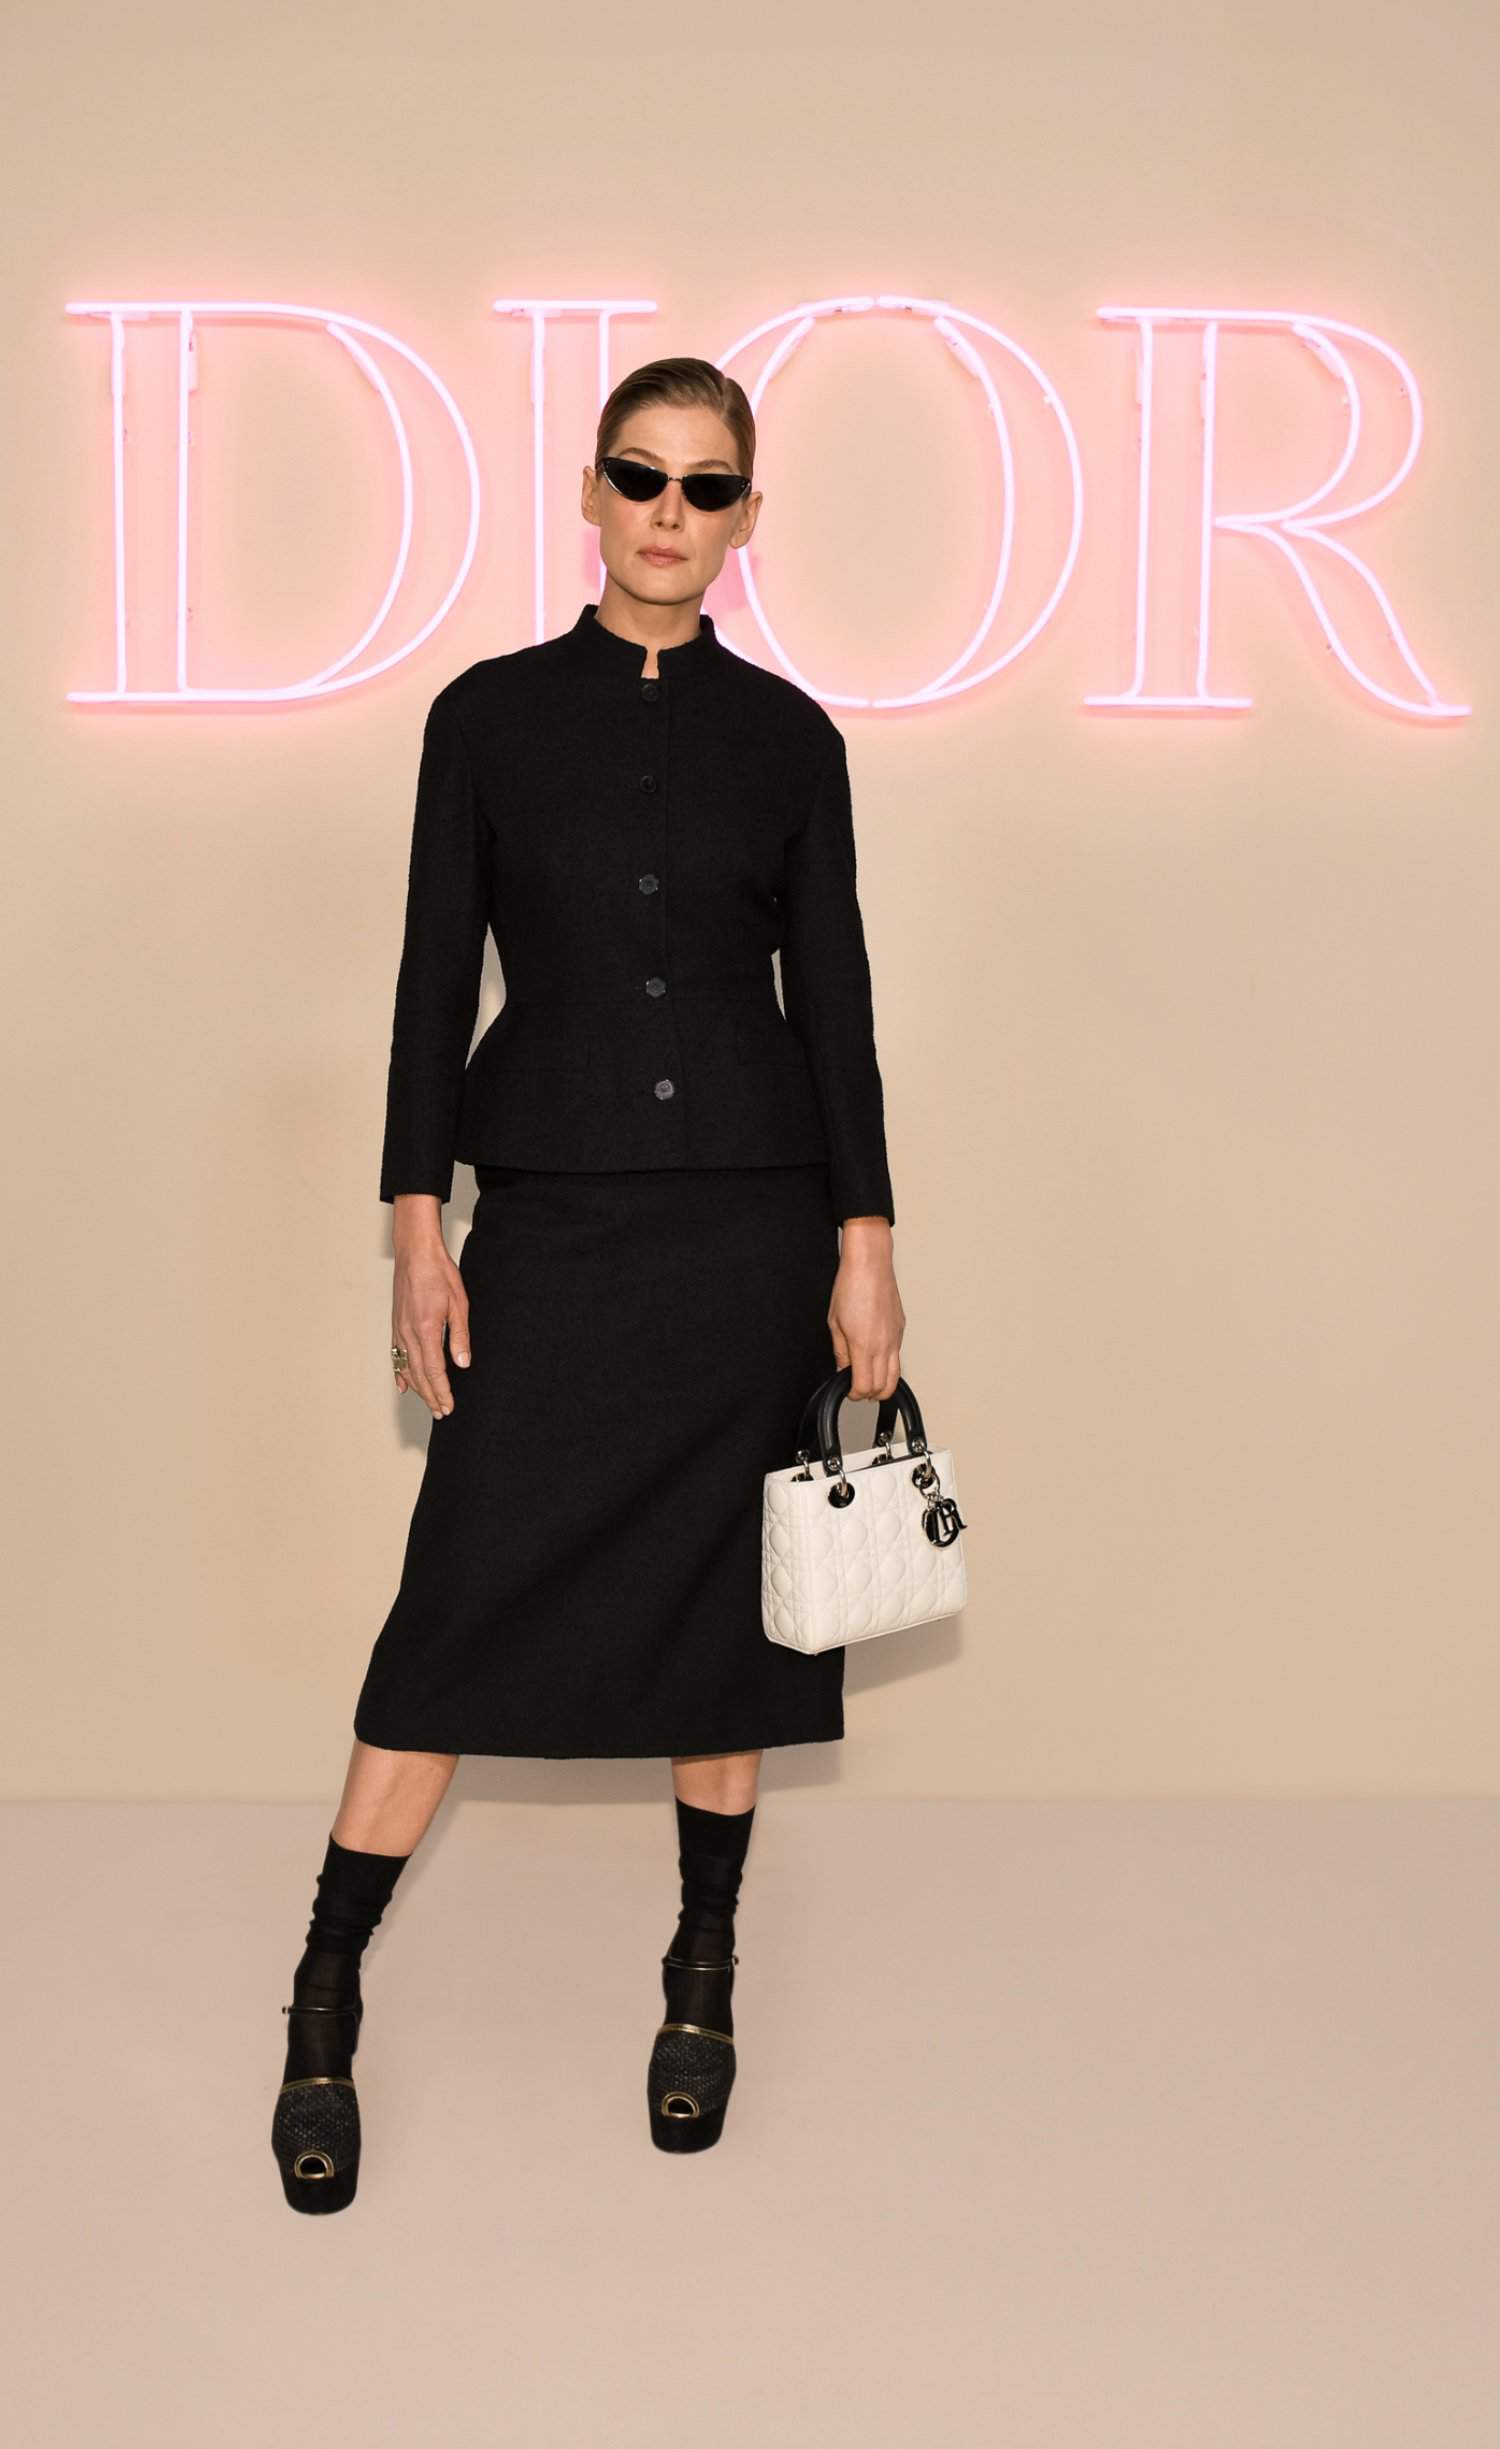 Dior, fashion show, New York City, Rosamund Pike